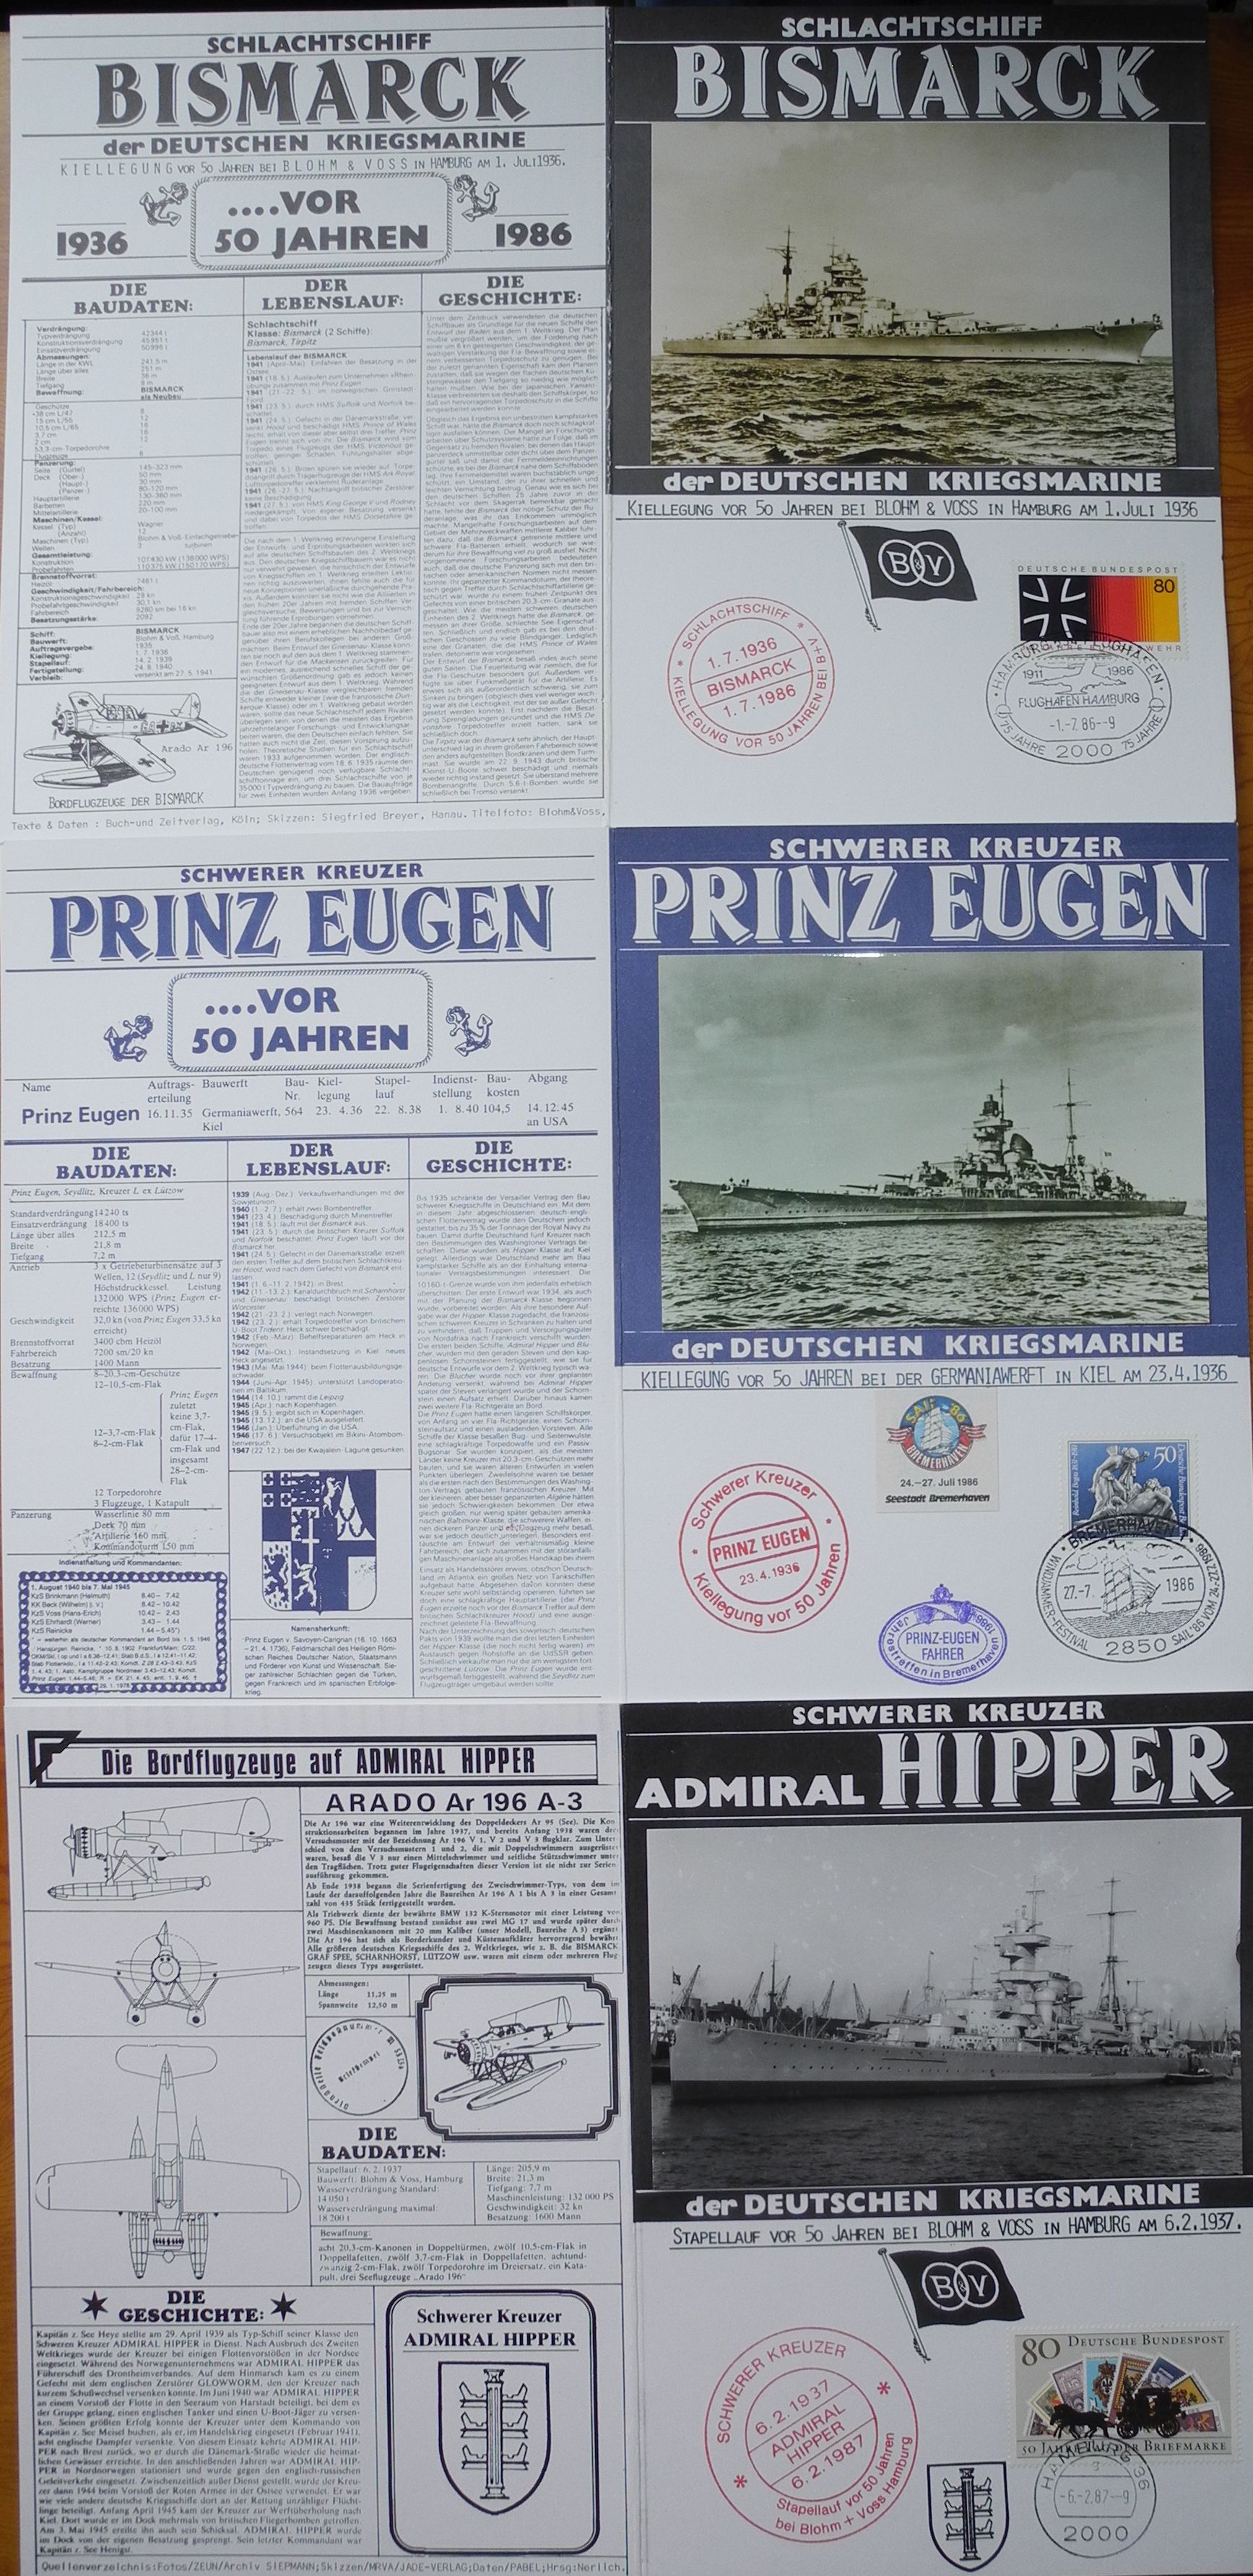 Schiffsinfo Bismark - Prinz Eugen - Admiral Hipper.jpg